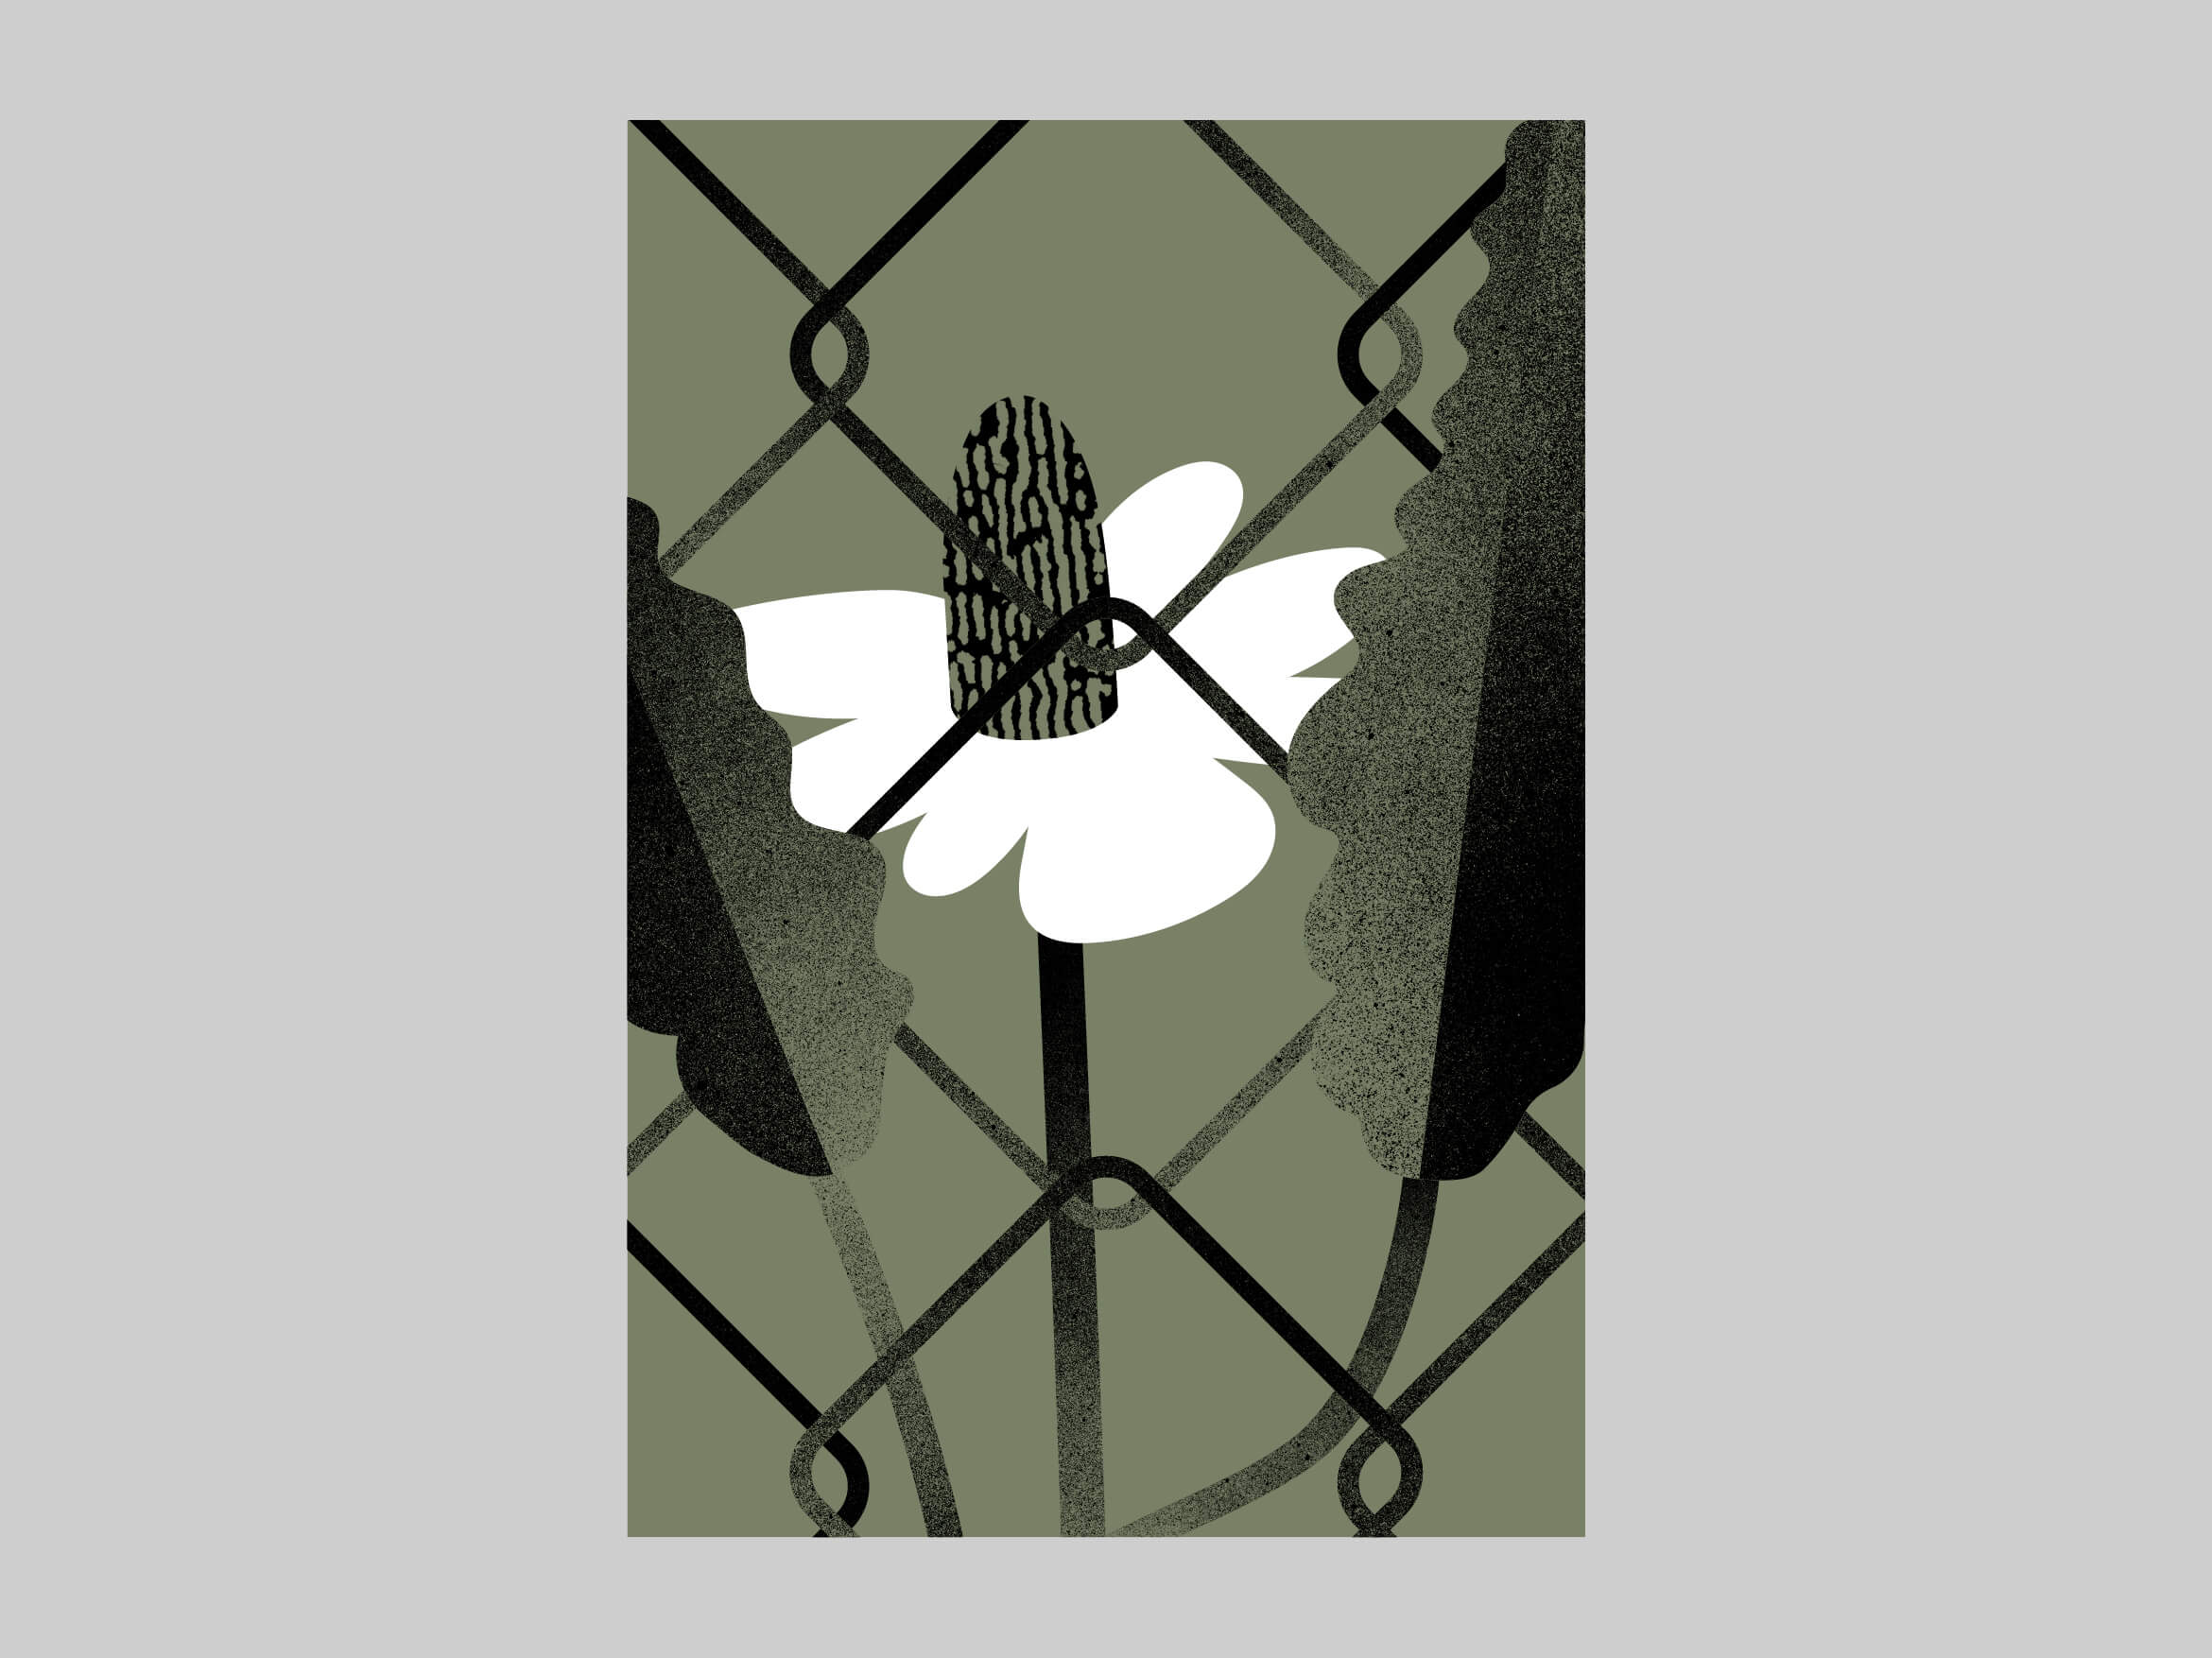 studio_andrebritz_flowers_behind_fences_illustration_001